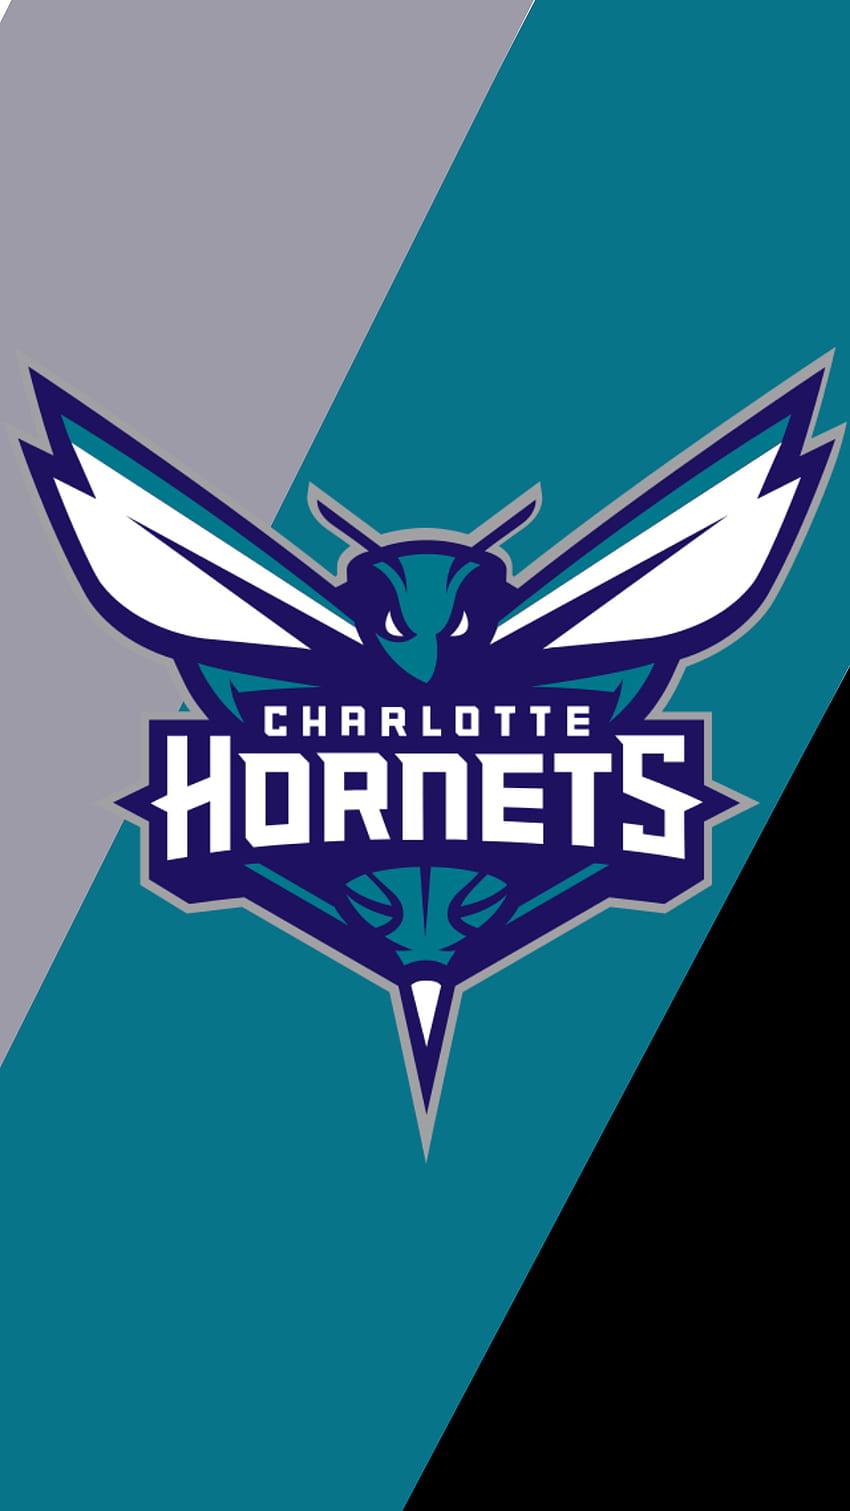 Charlotte Hornets 3D Wallpaper  Charlotte hornets Nba basketball teams  Hornets basketball